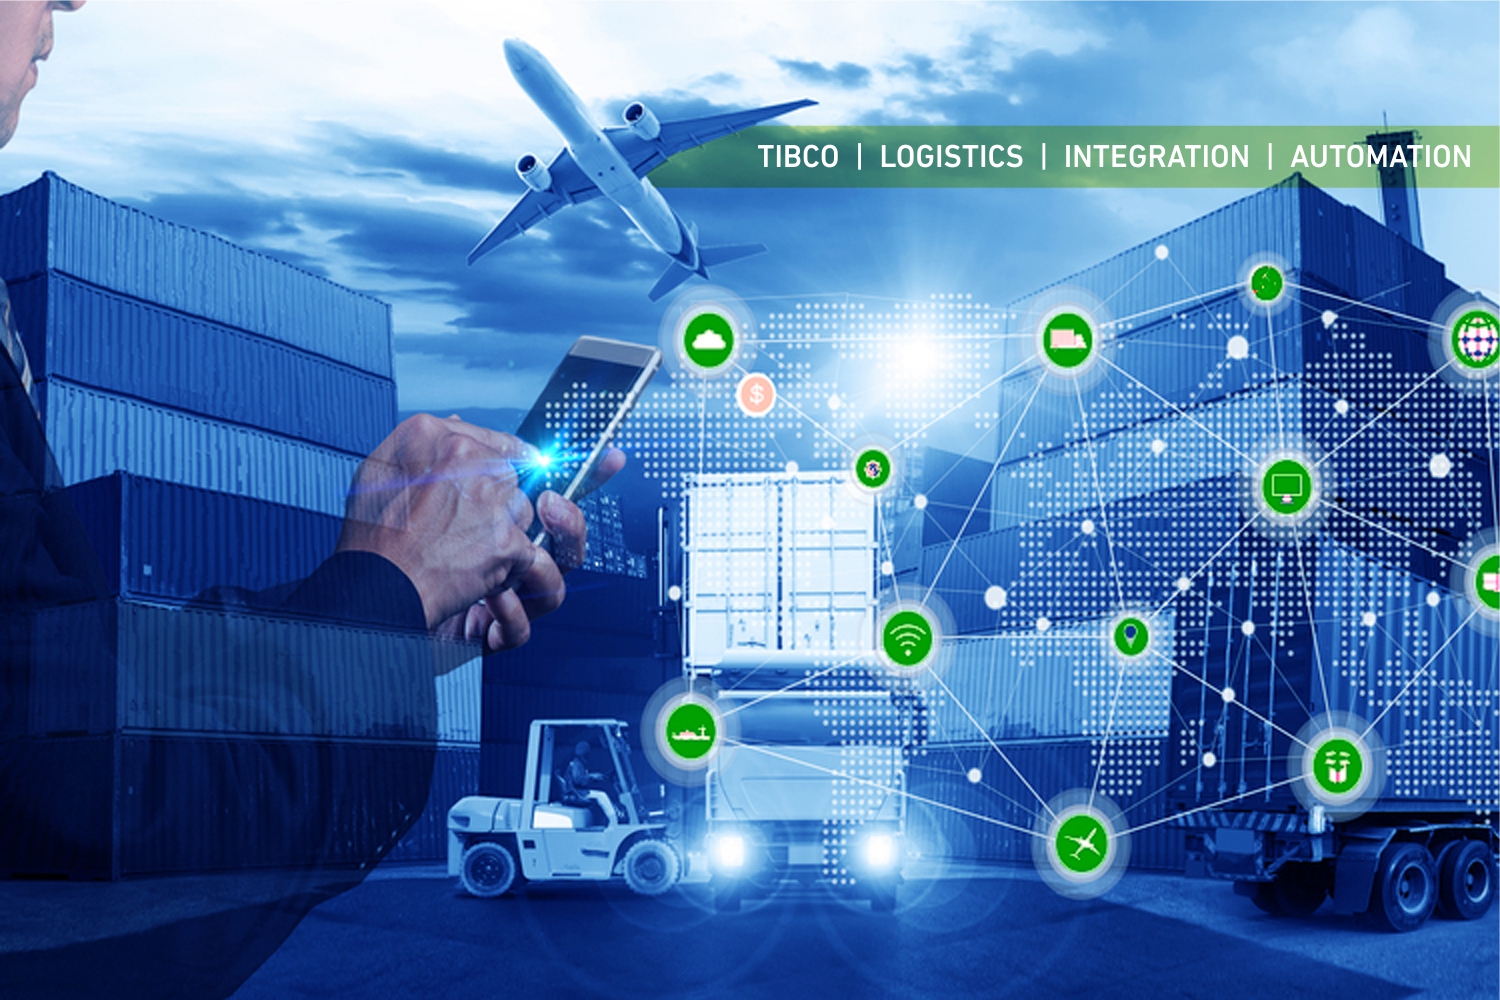 Image Of Tibco+Logistics +Automation+Integration